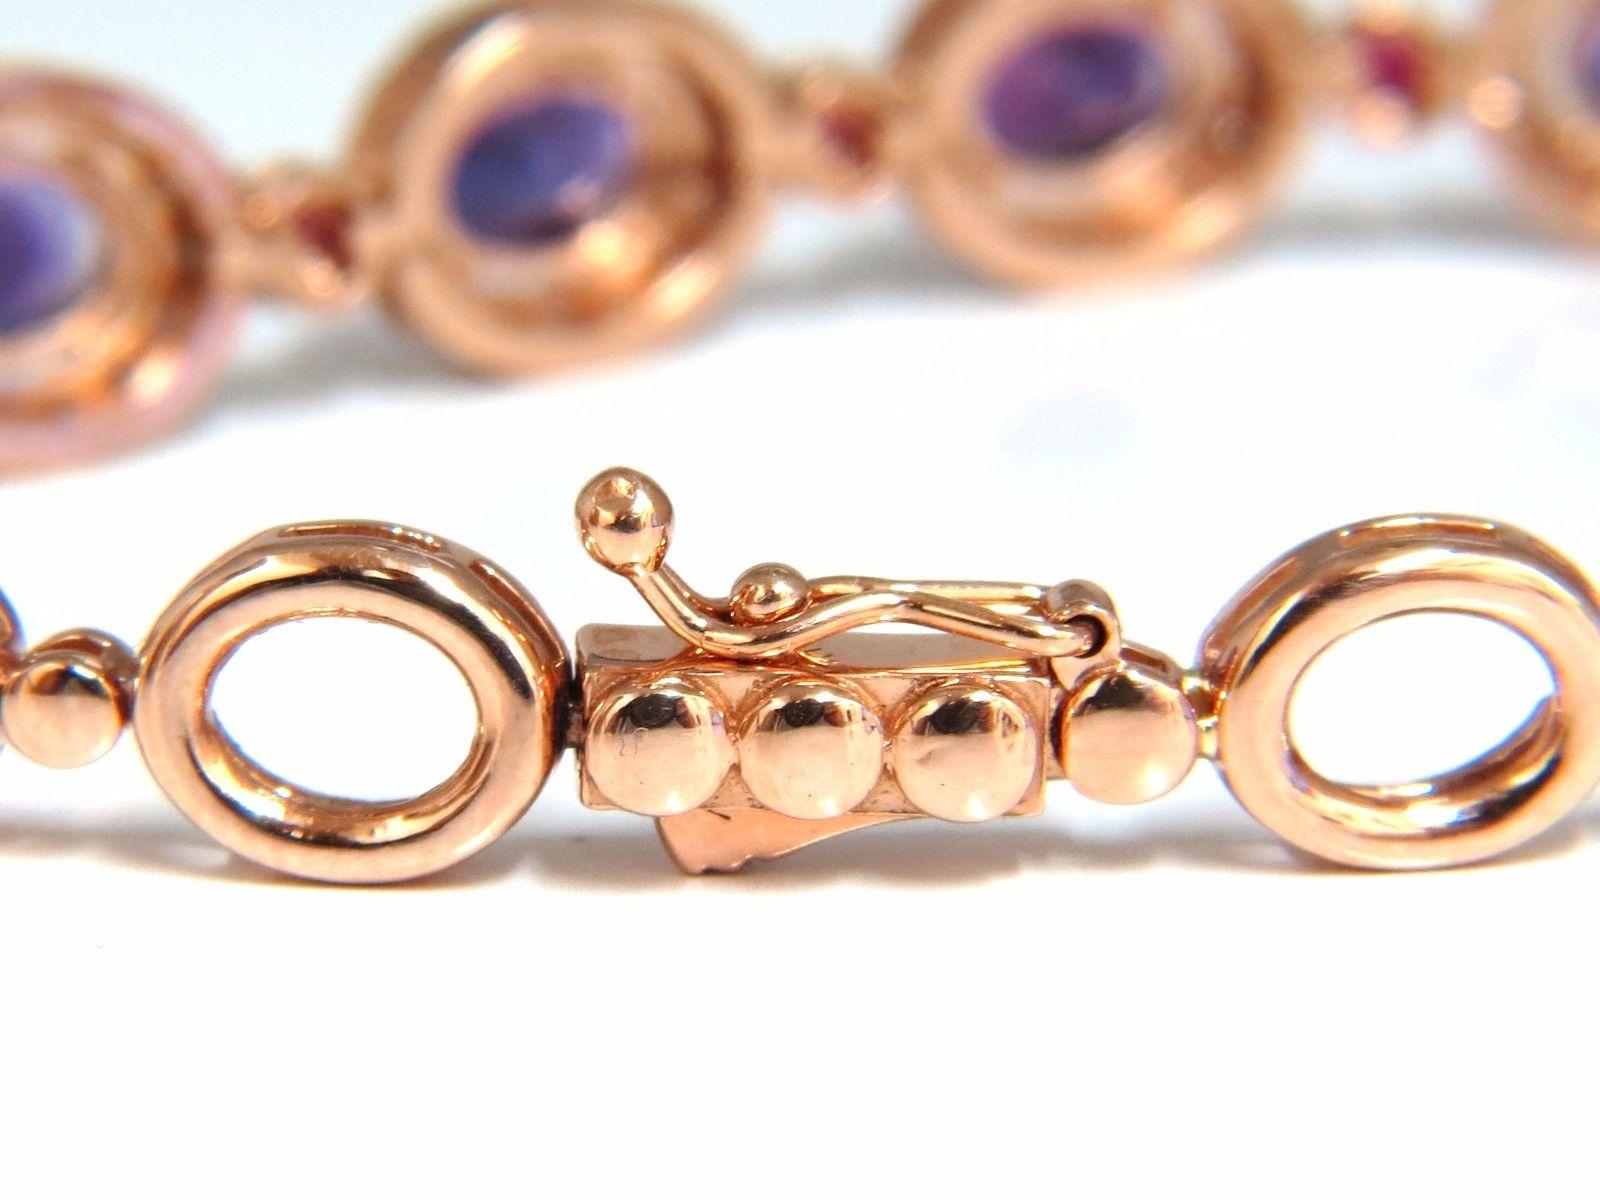 Amethyst diamond halo tennis bracelet
4.50ct. Natural Amethysts 

Vs clean clear clarity.

Each range 7 X 5mm

Vibrant purple

Brilliant oval cut

Transparent 

1.36ct. Natural Diamonds.

Rounds & full cut

G-color, Vs-2 clarity.

Additional .60ct.